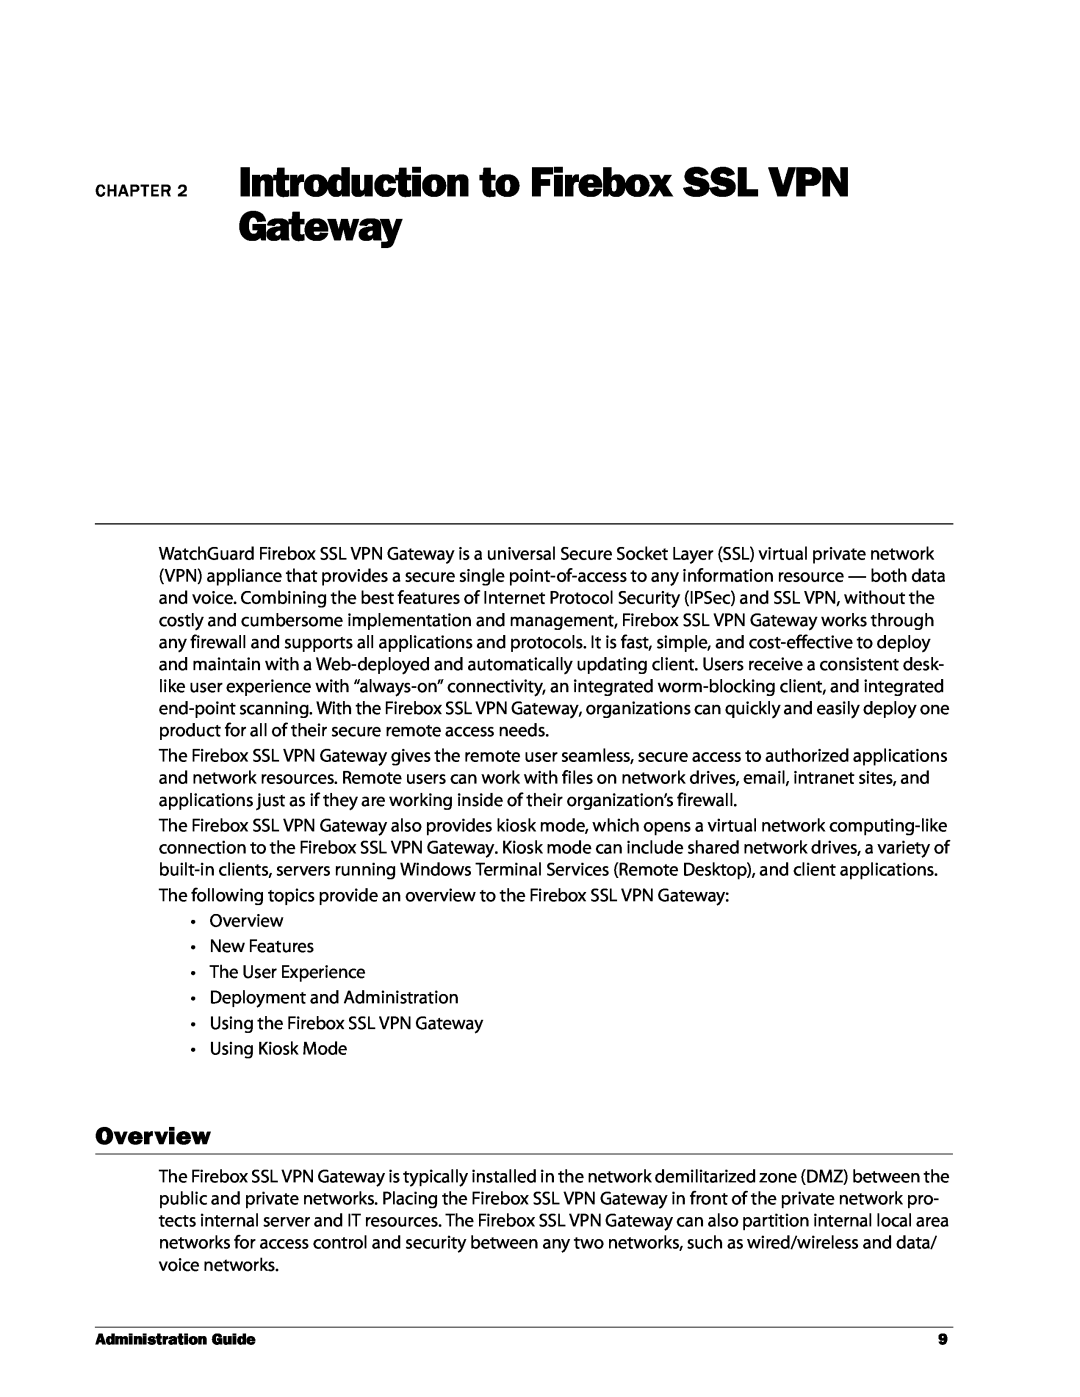 WatchGuard Technologies manual Introduction to Firebox SSL VPN Gateway, Overview 